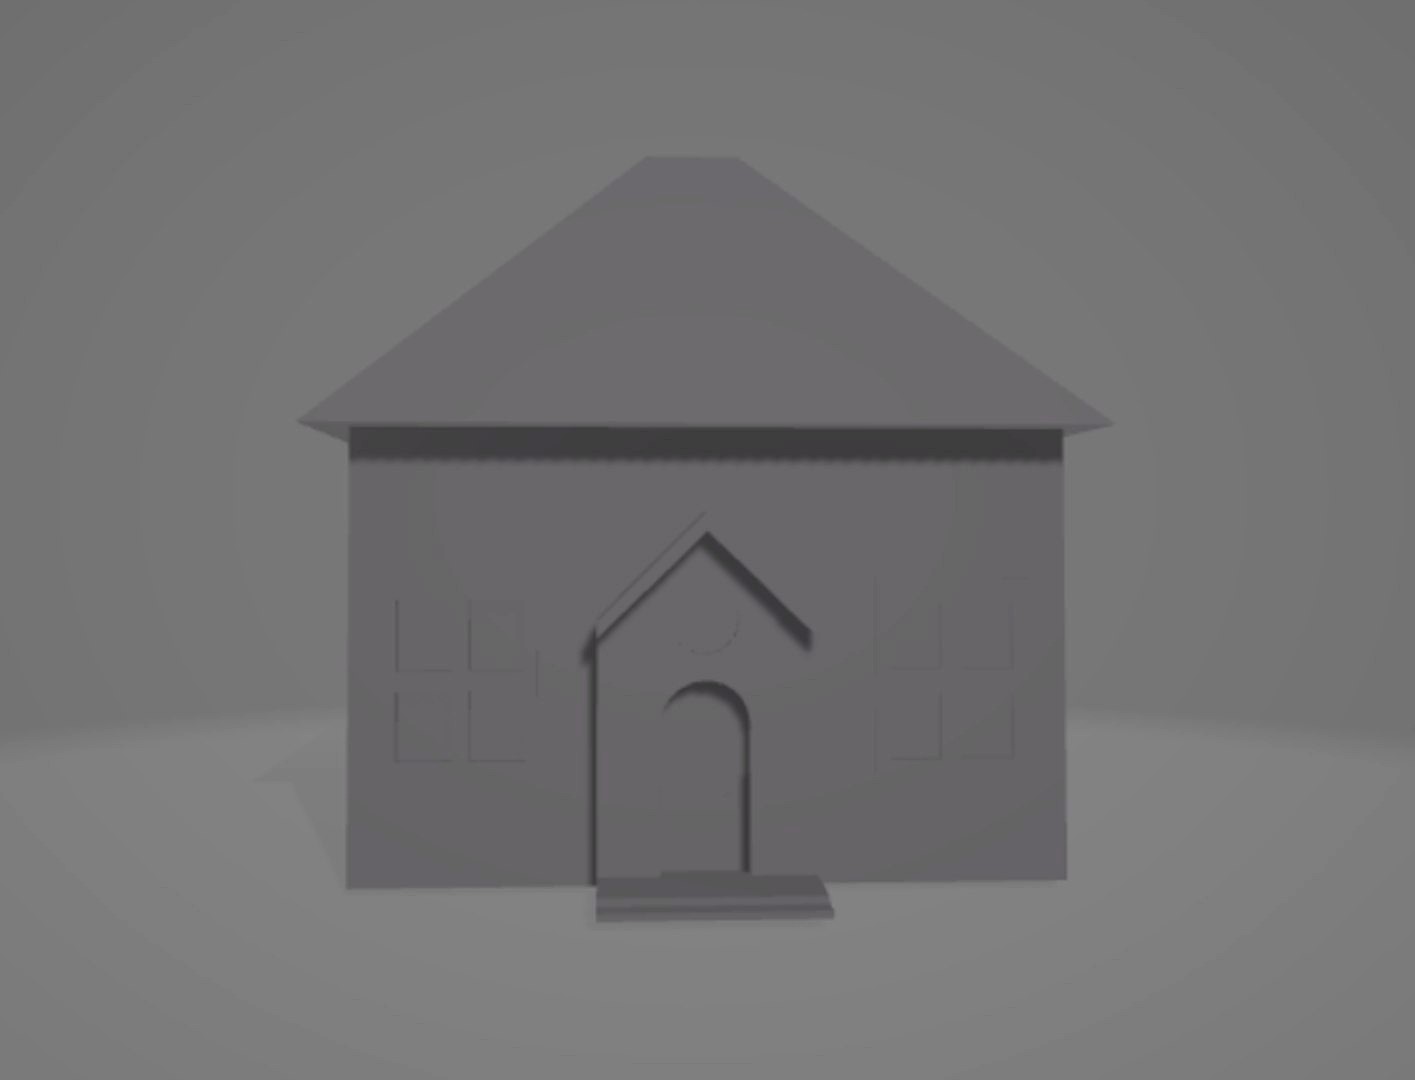 Simple House